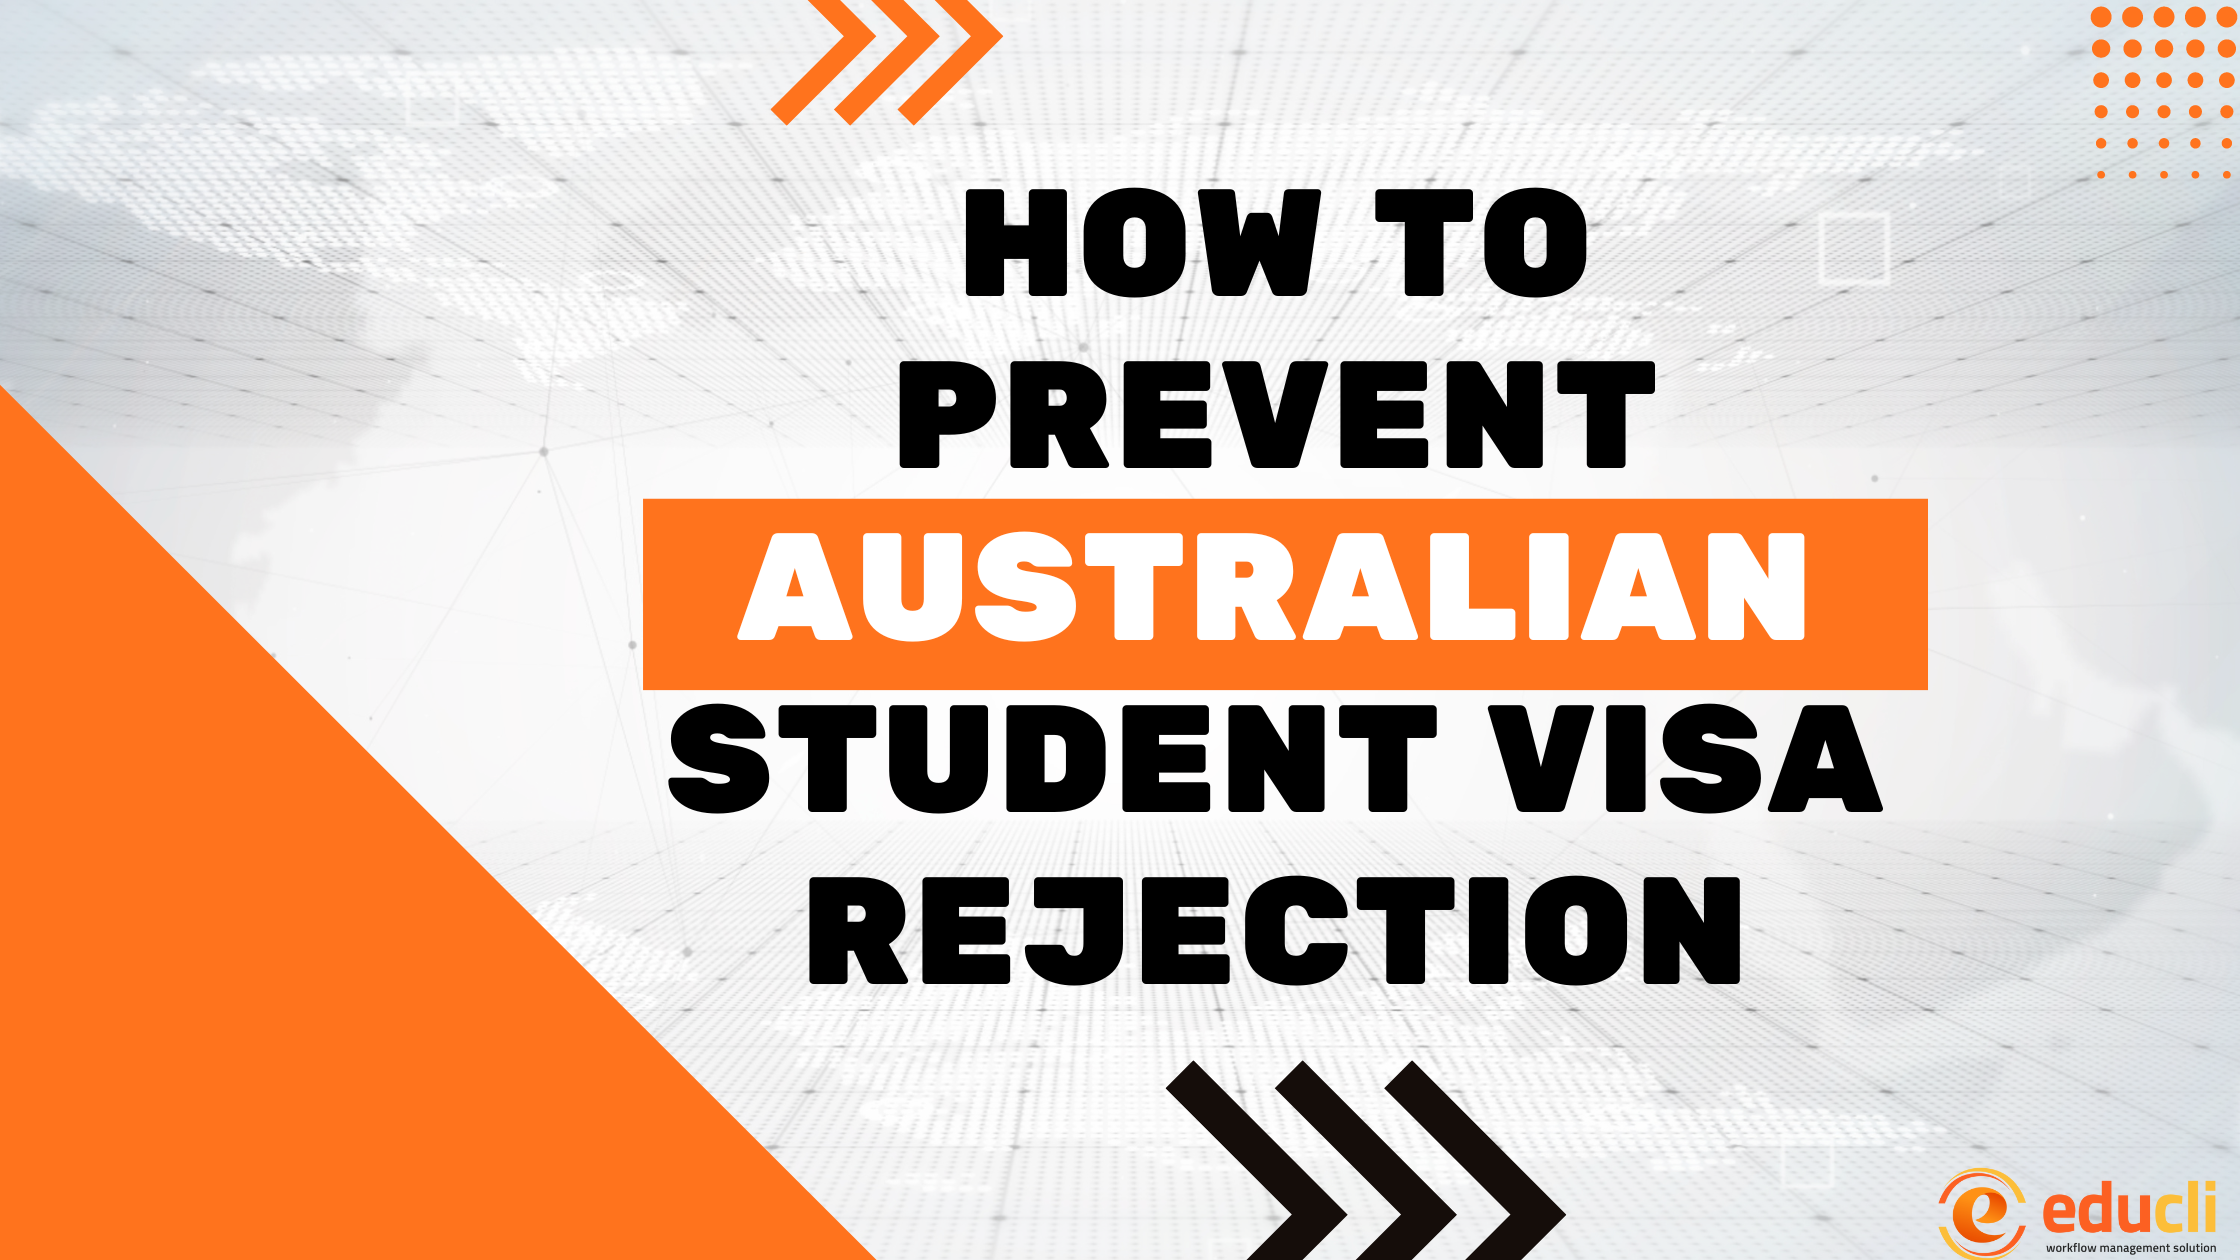 HOW TO PREVENT AUSTRALIAN STUDENT VISA REJECTION